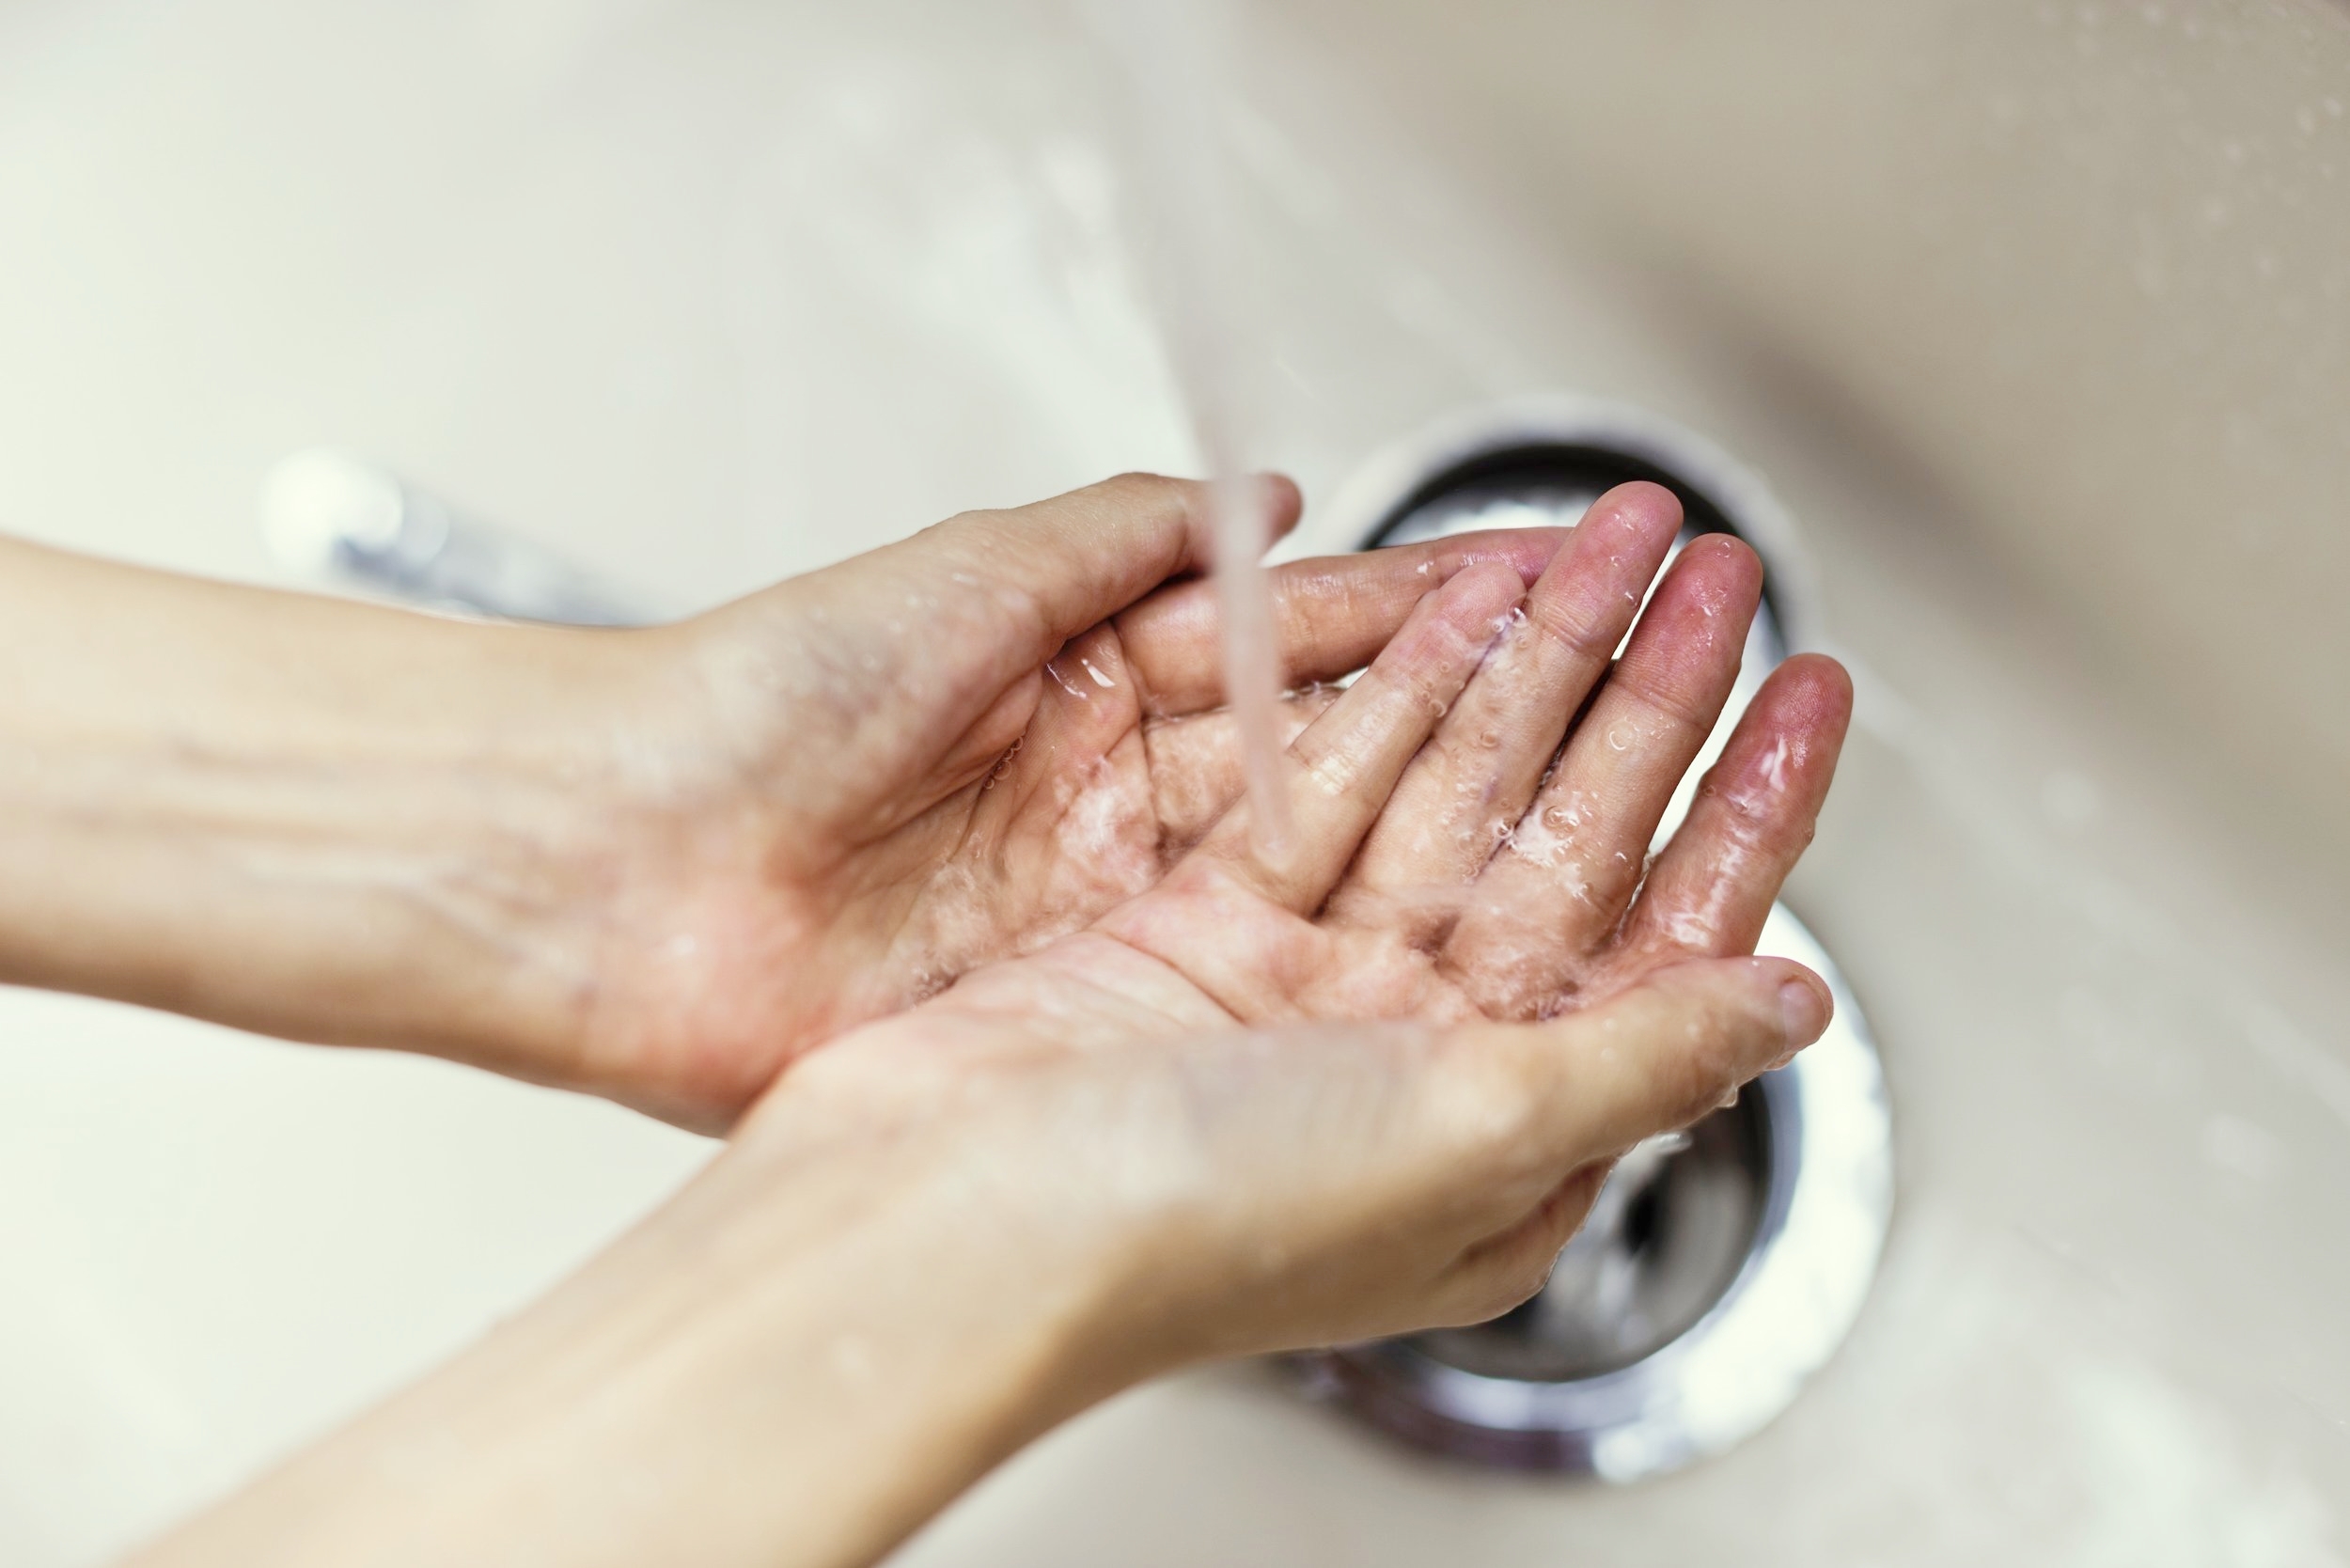 Tips to Increase Hand Hygiene During Flu Season